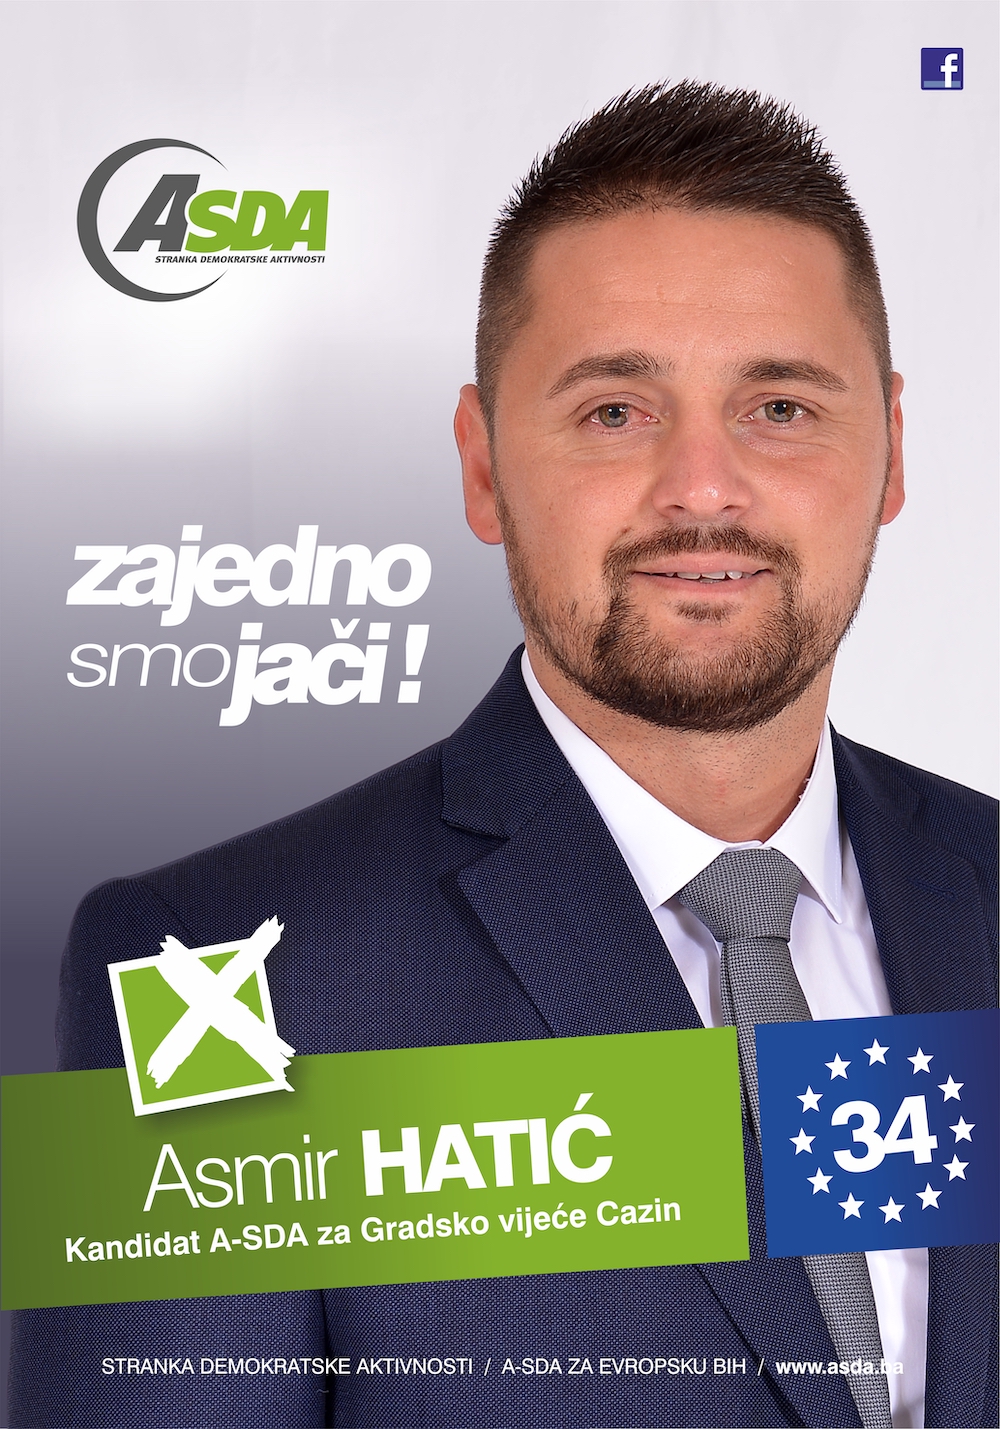 Asmir Hatić